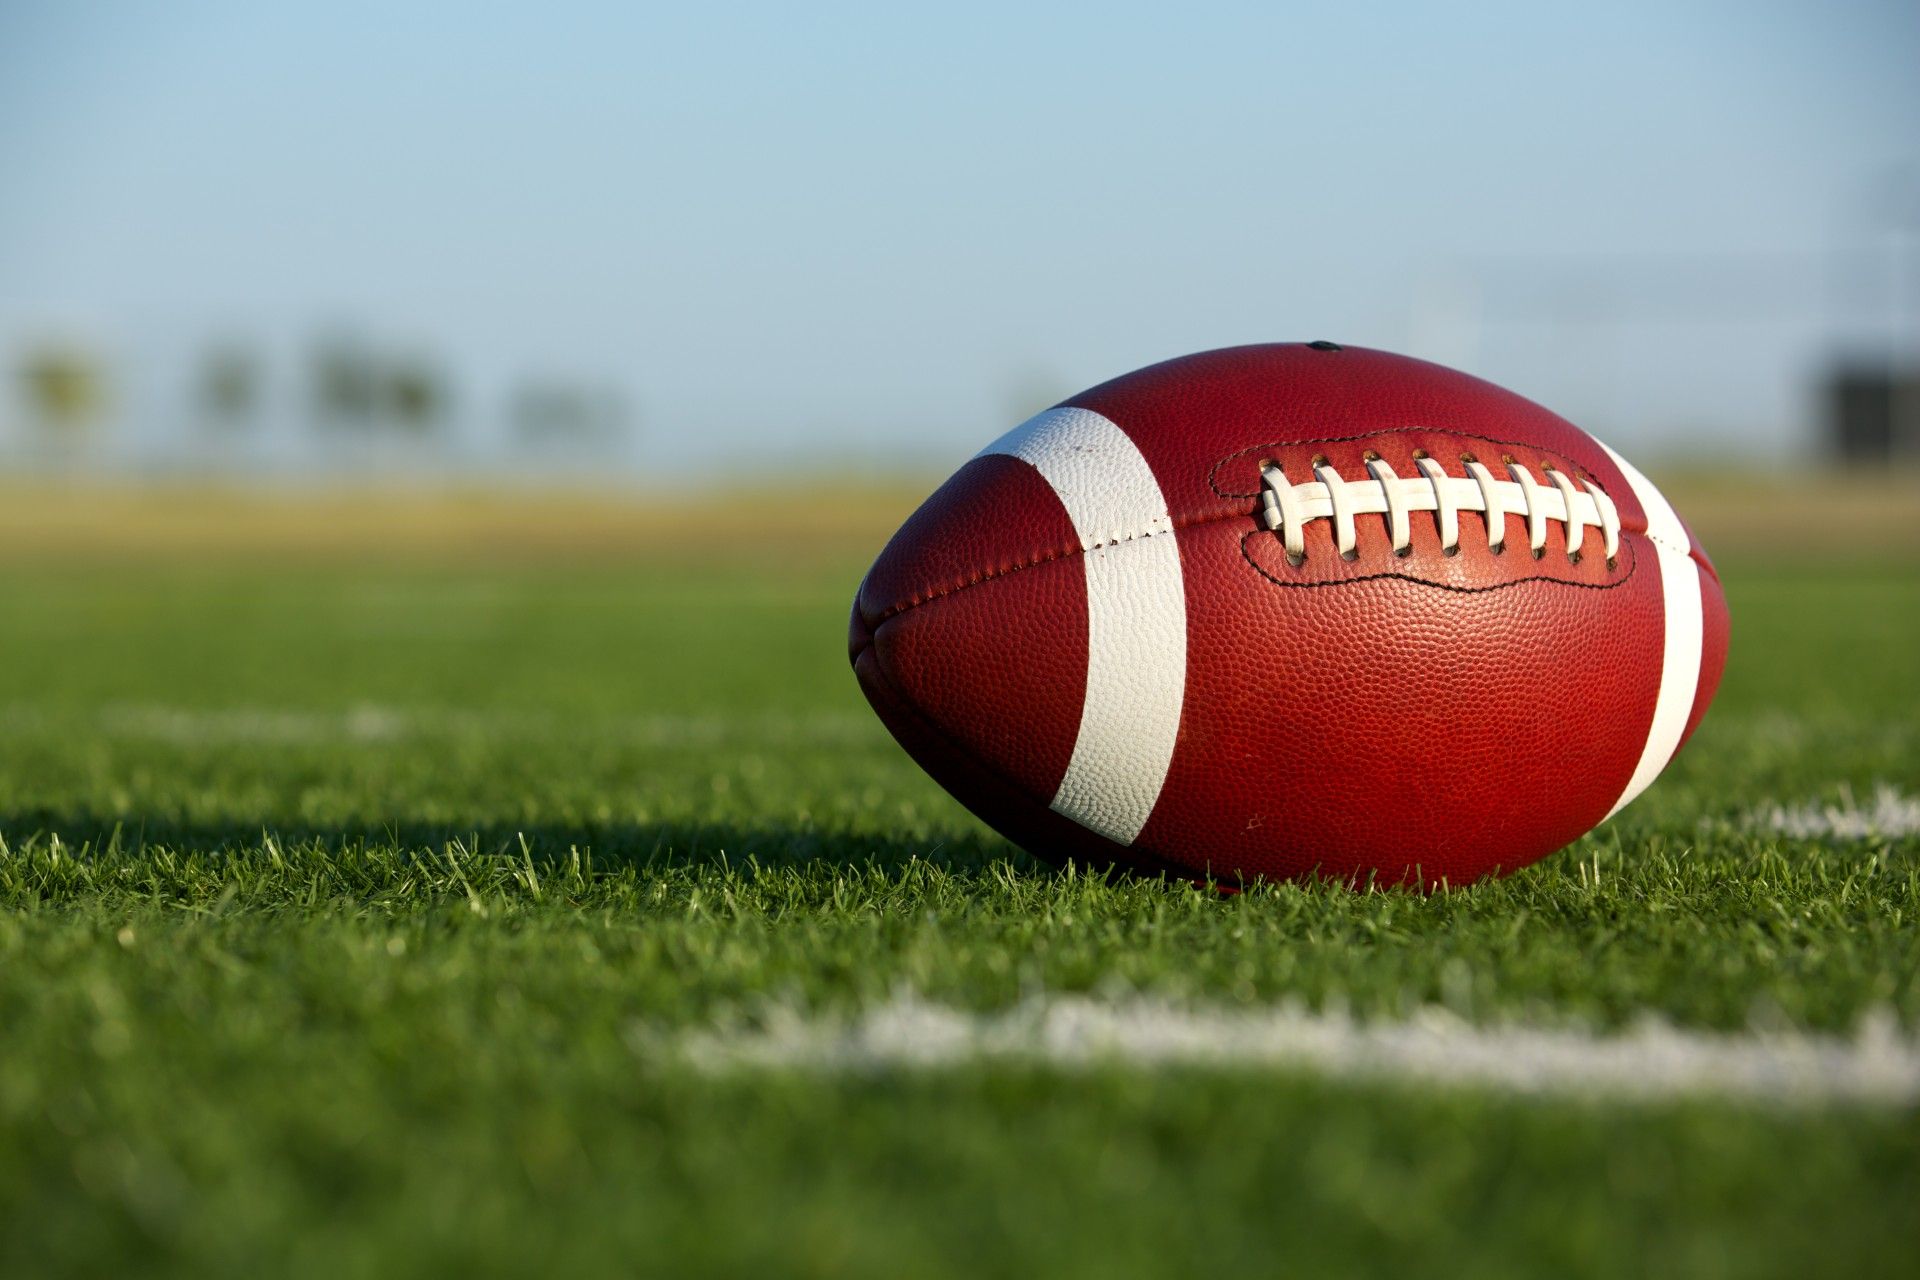 Football on field - 49ers football stadium class action lawsuit